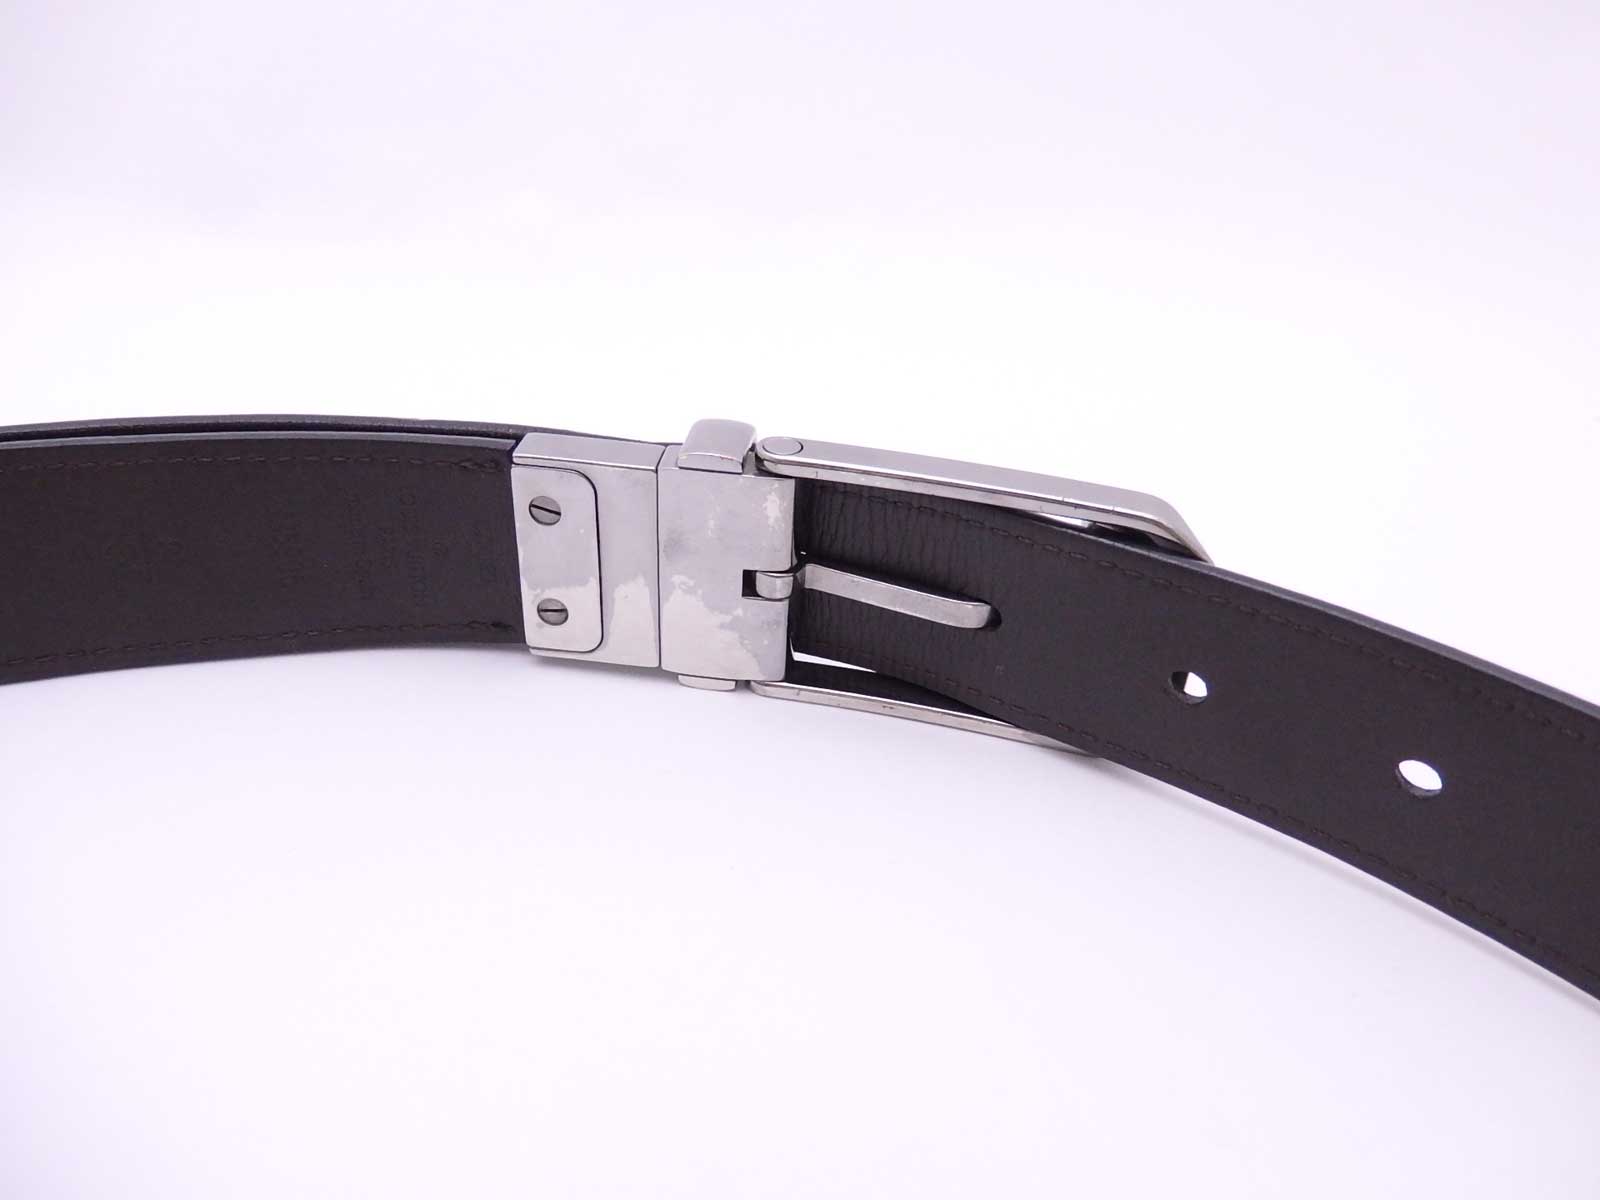 Auth Louis Vuitton Belt Size: 85/34 Black Leather/Silvertone *USED* - e44468e | eBay